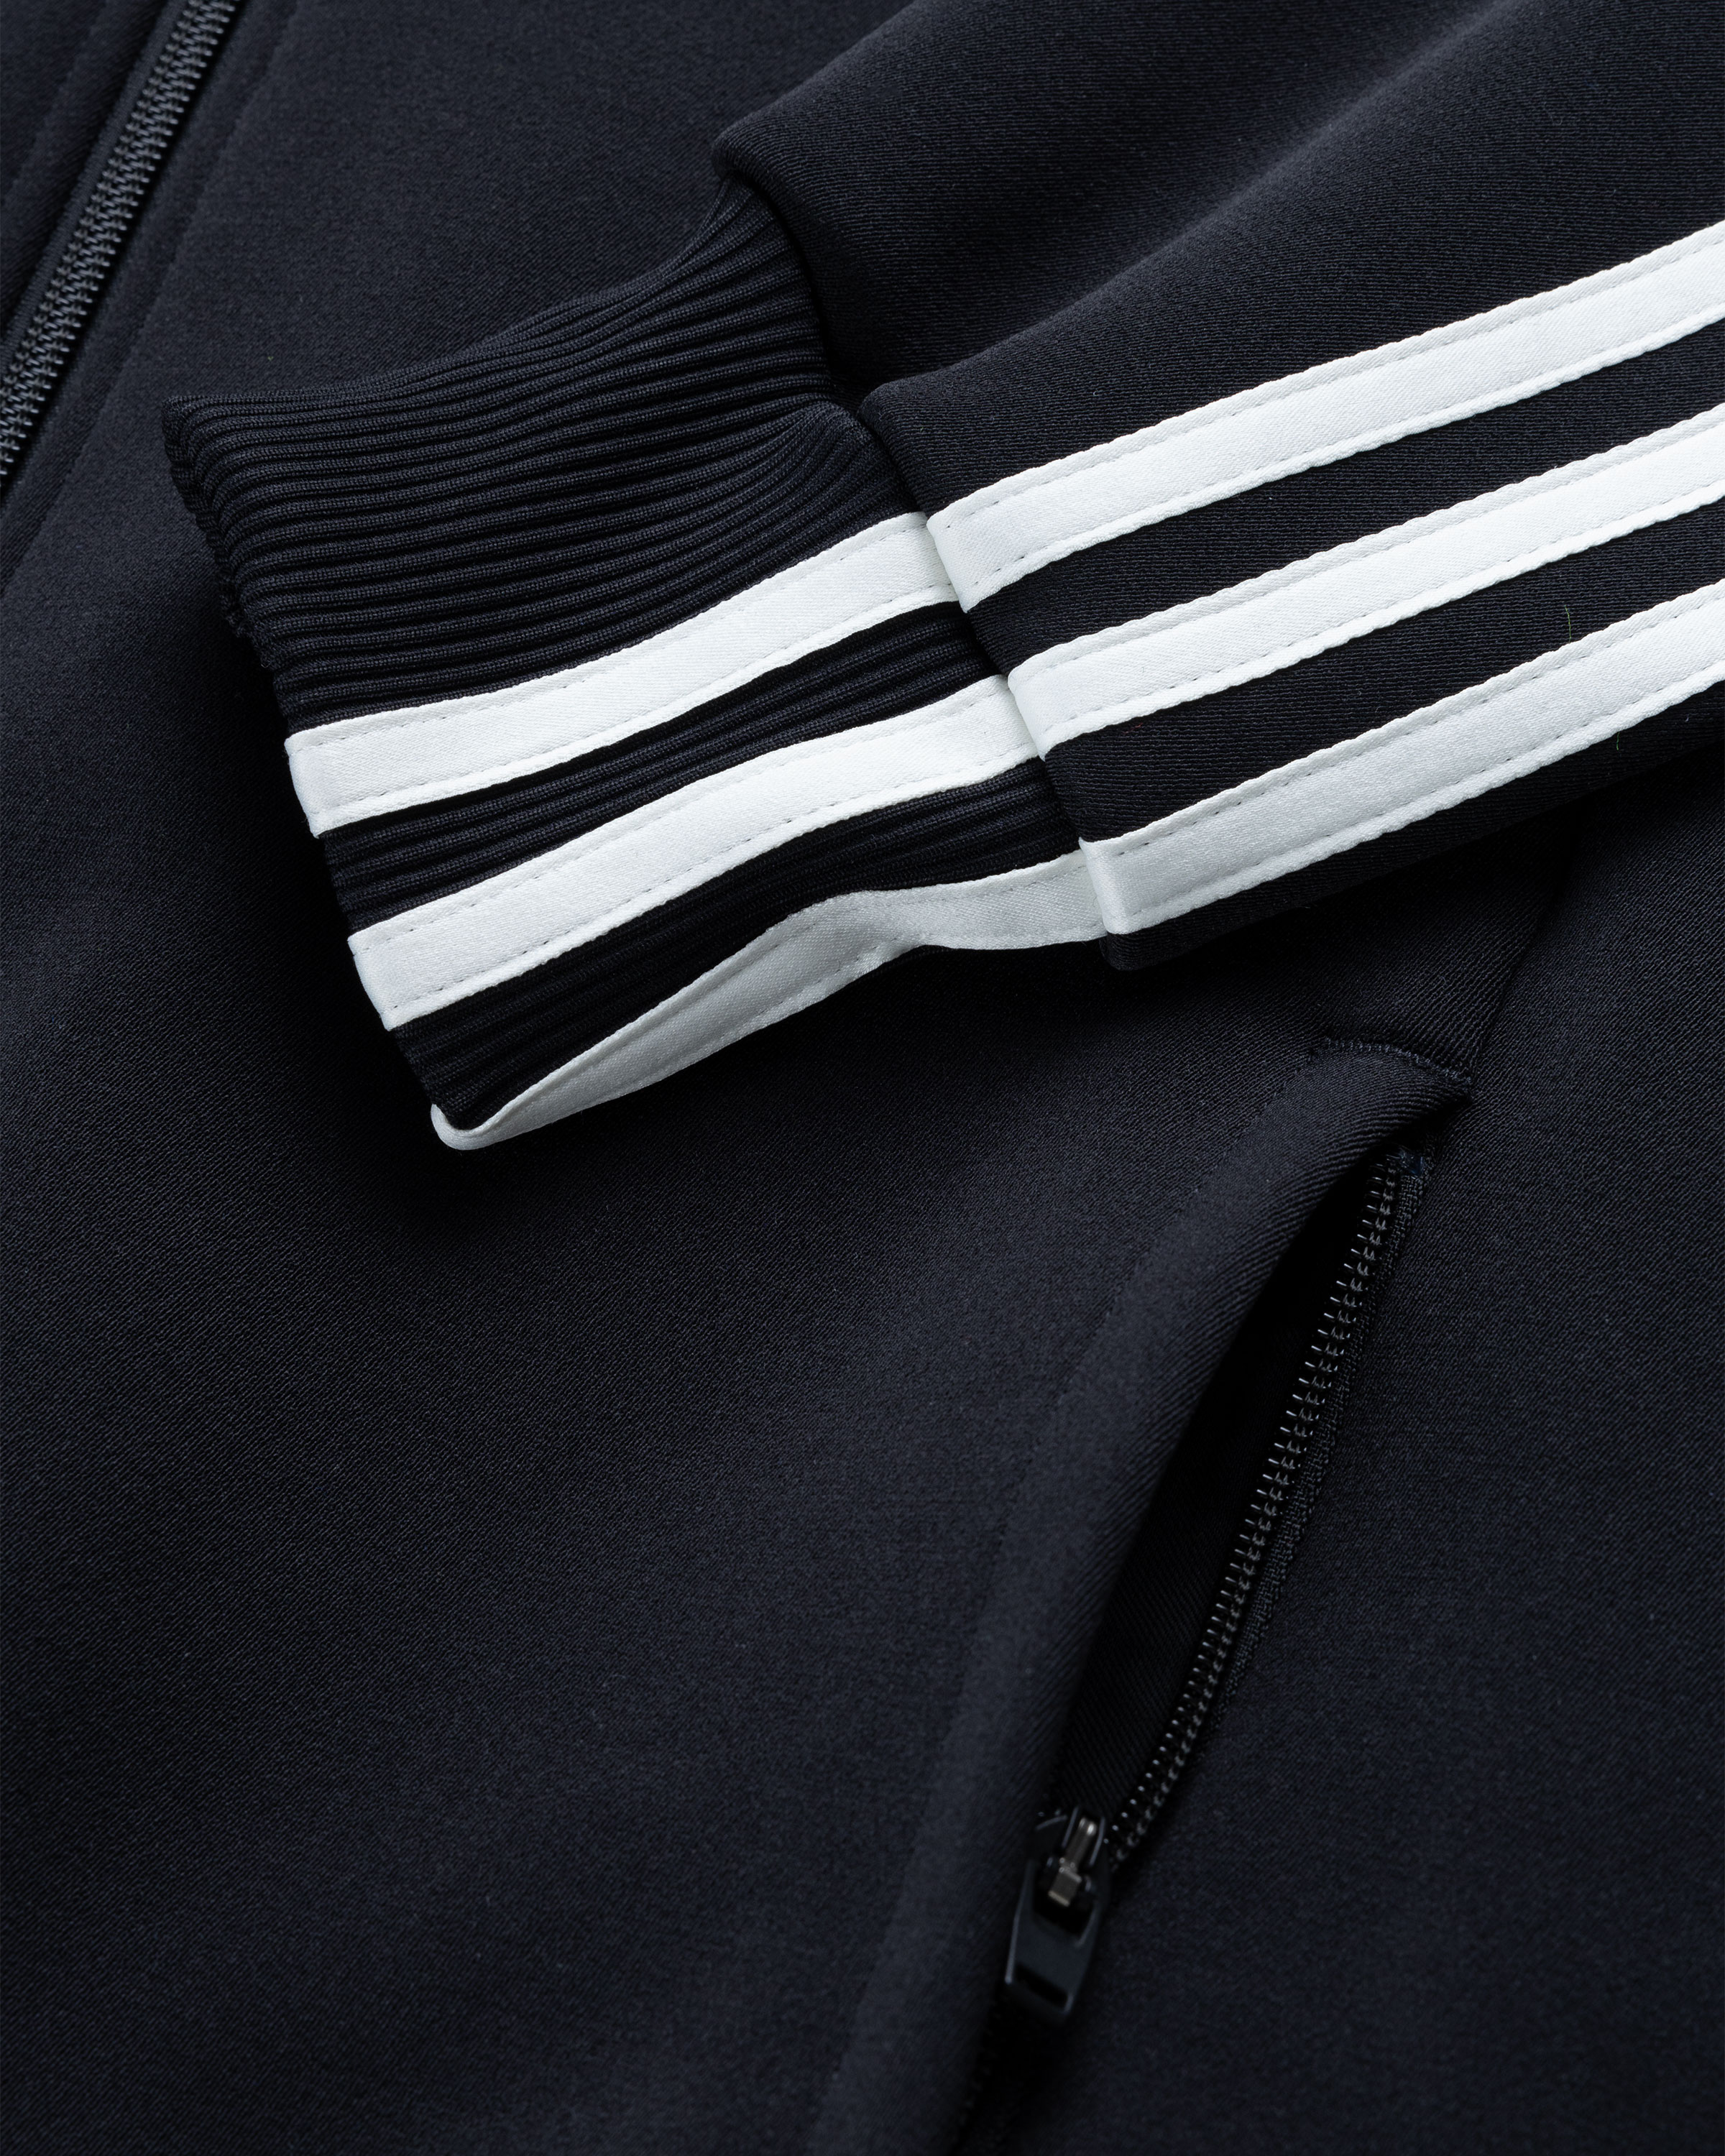 Y-3 – 3 Stripes Track Top Black/White - Outerwear - Black - Image 7